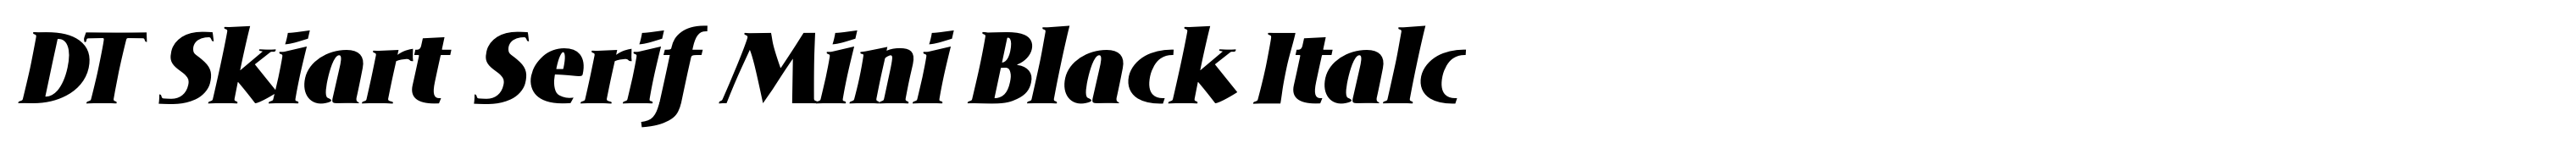 DT Skiart Serif Mini Black Italc